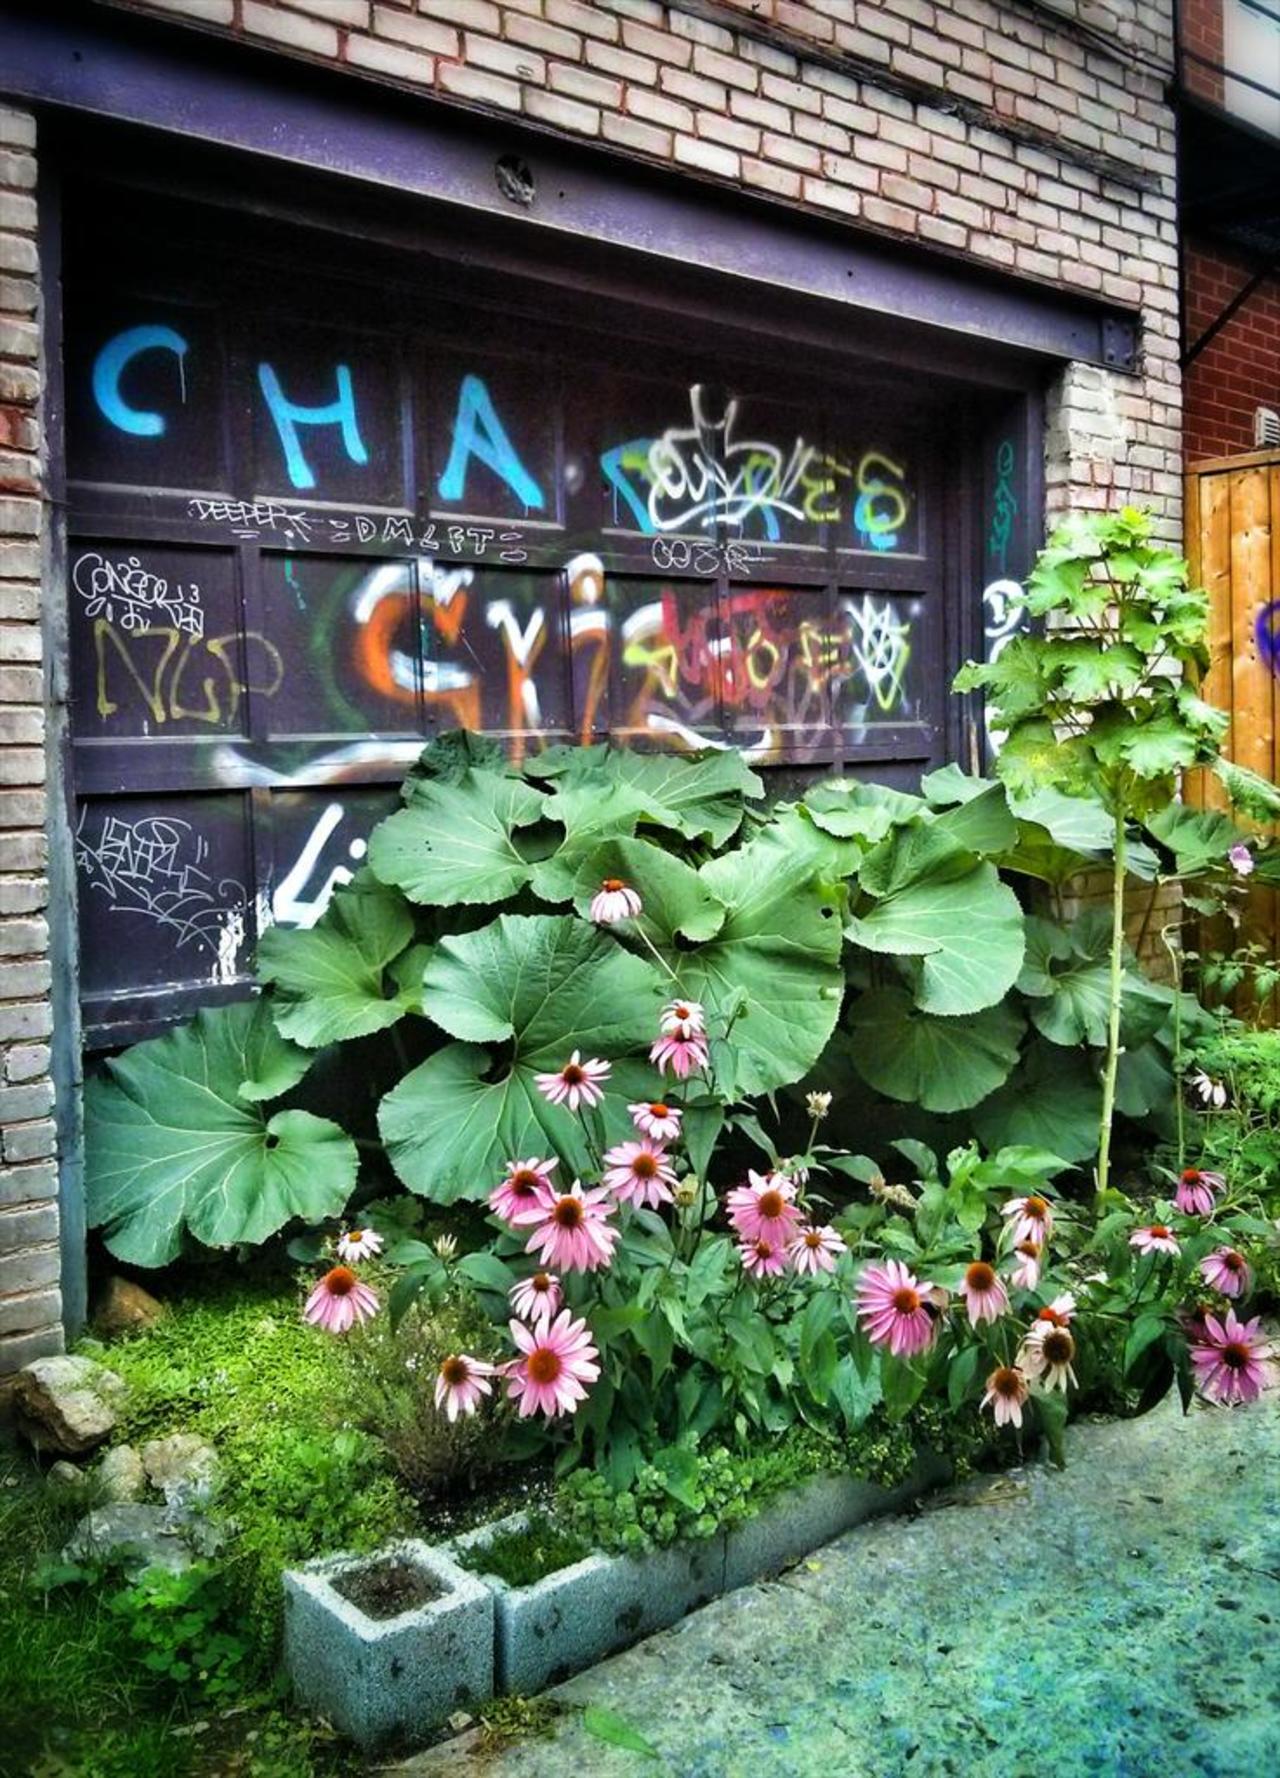 RT @Catjk68: Montreal in August.
#tbt #graffiti #streetart #urbanart http://t.co/BGsOrHJ3DW